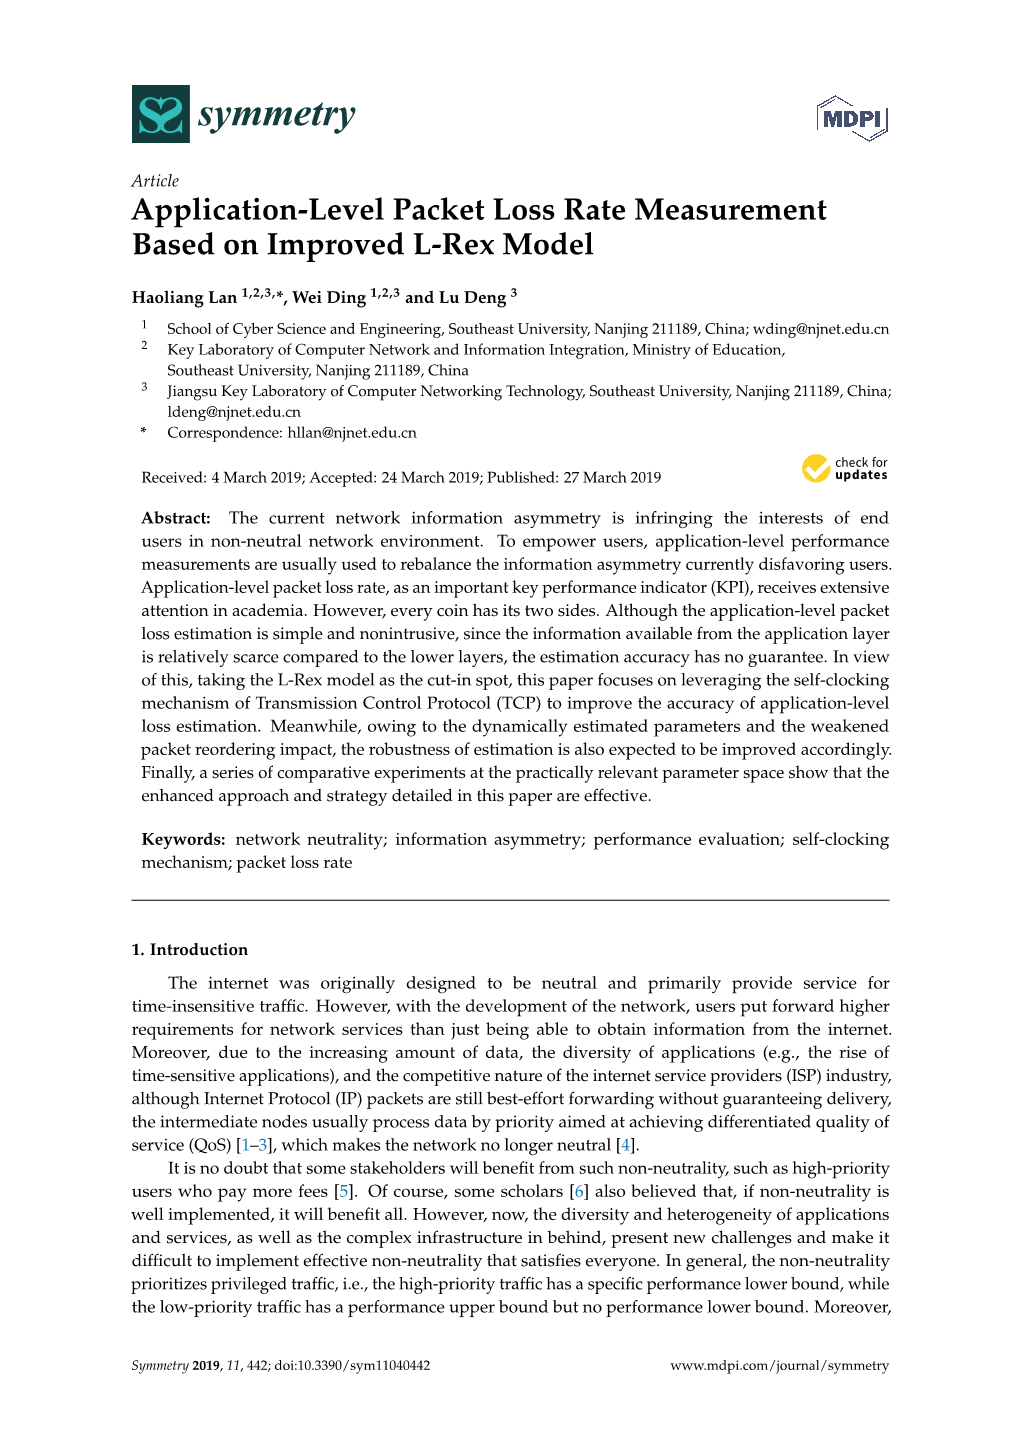 Application-Level Packet Loss Rate Measurement Based on Improved L-Rex Model